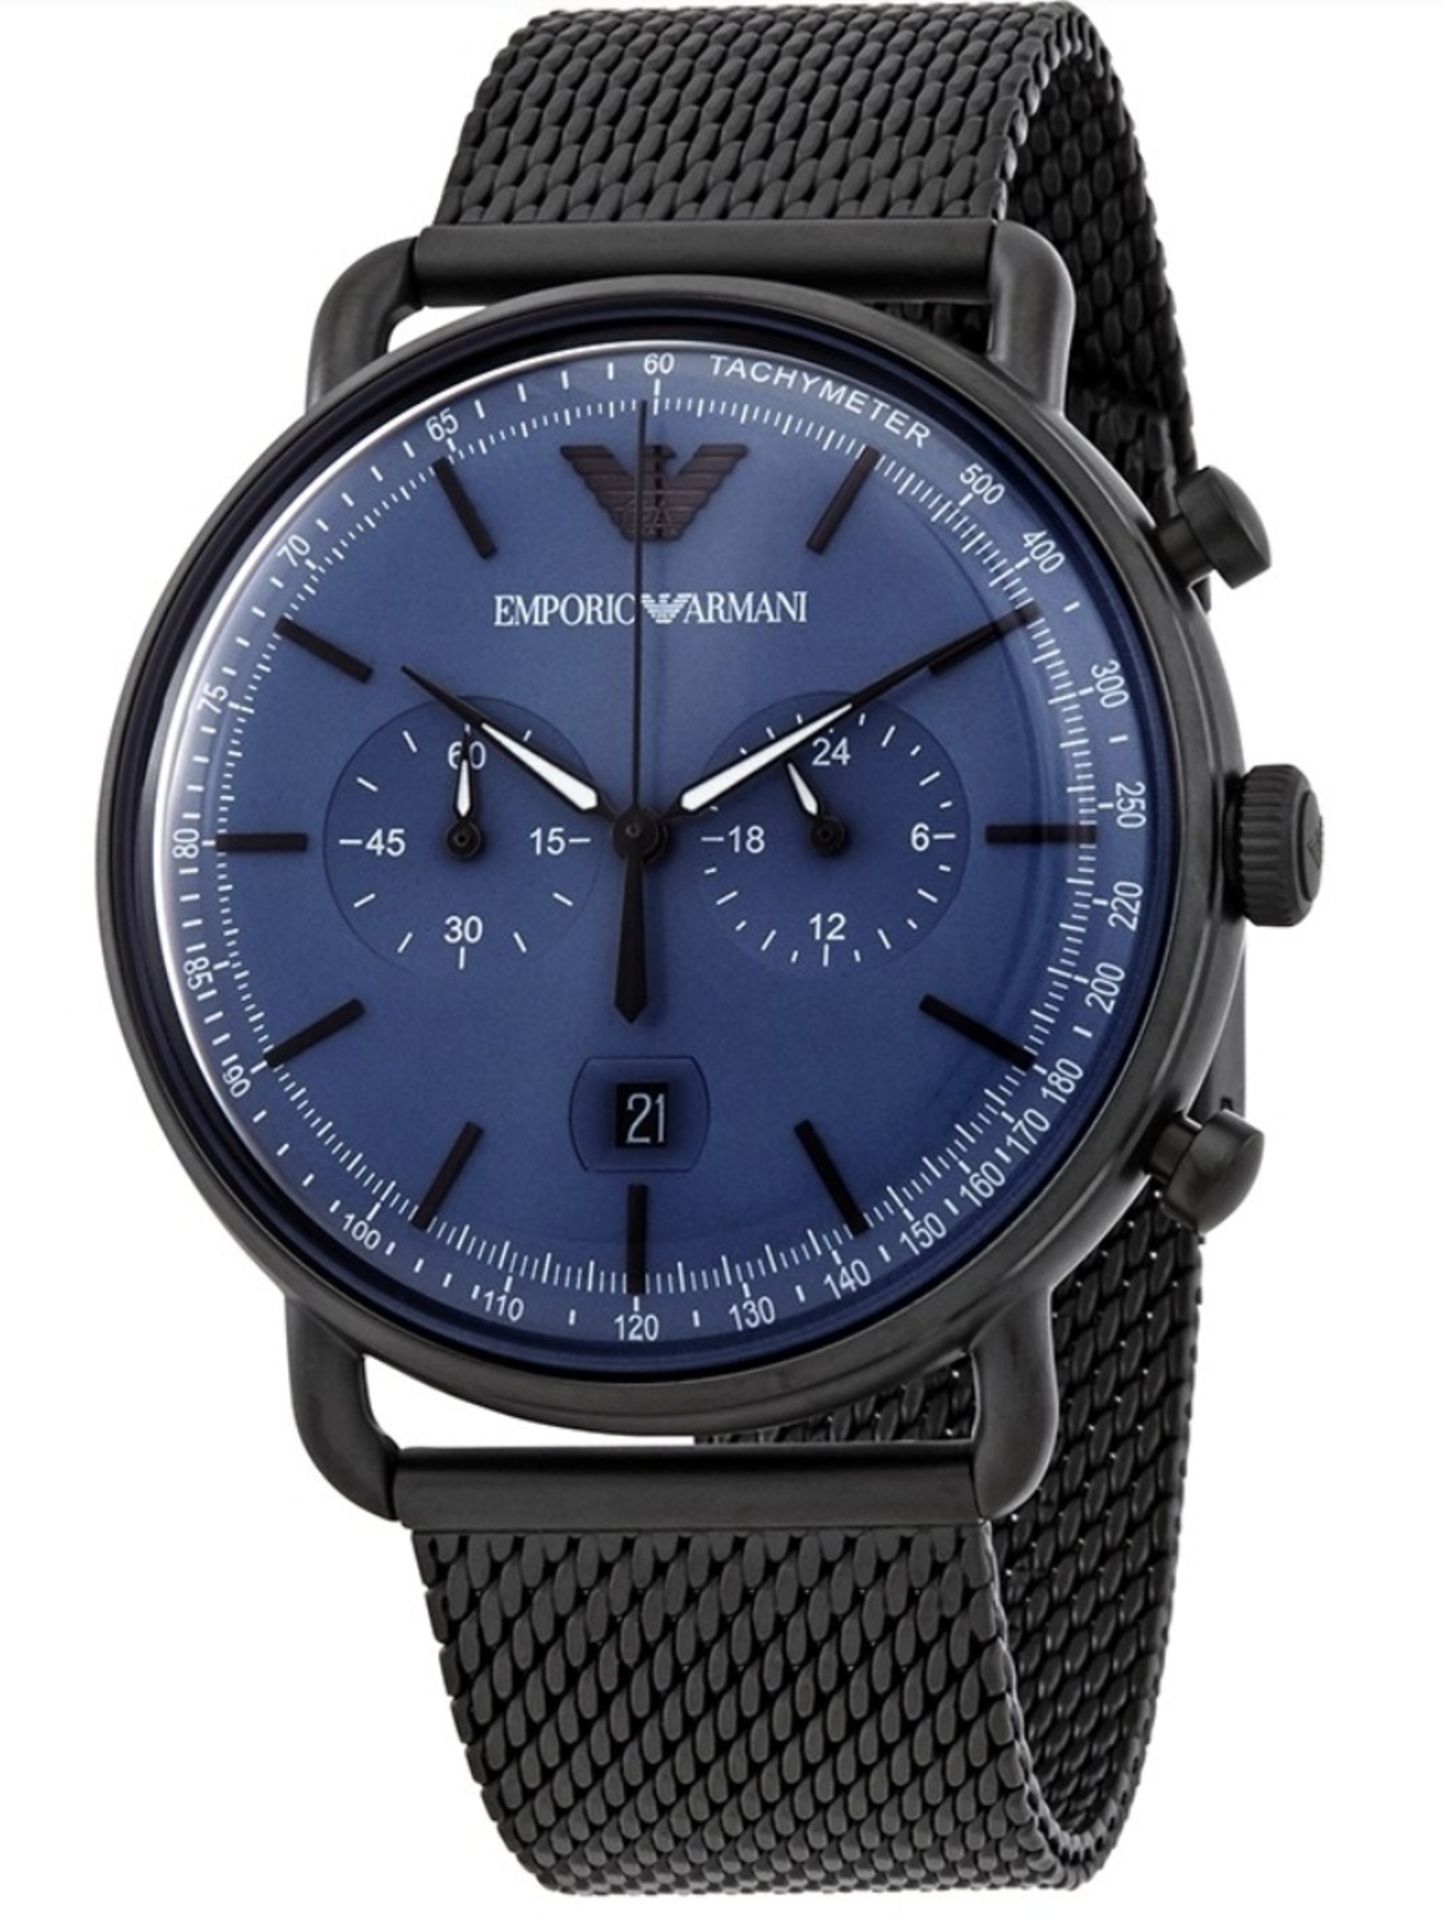 Emporio Armani AR11201 Men's Aviator Black Mesh Band Chronograph Watch - Image 3 of 5